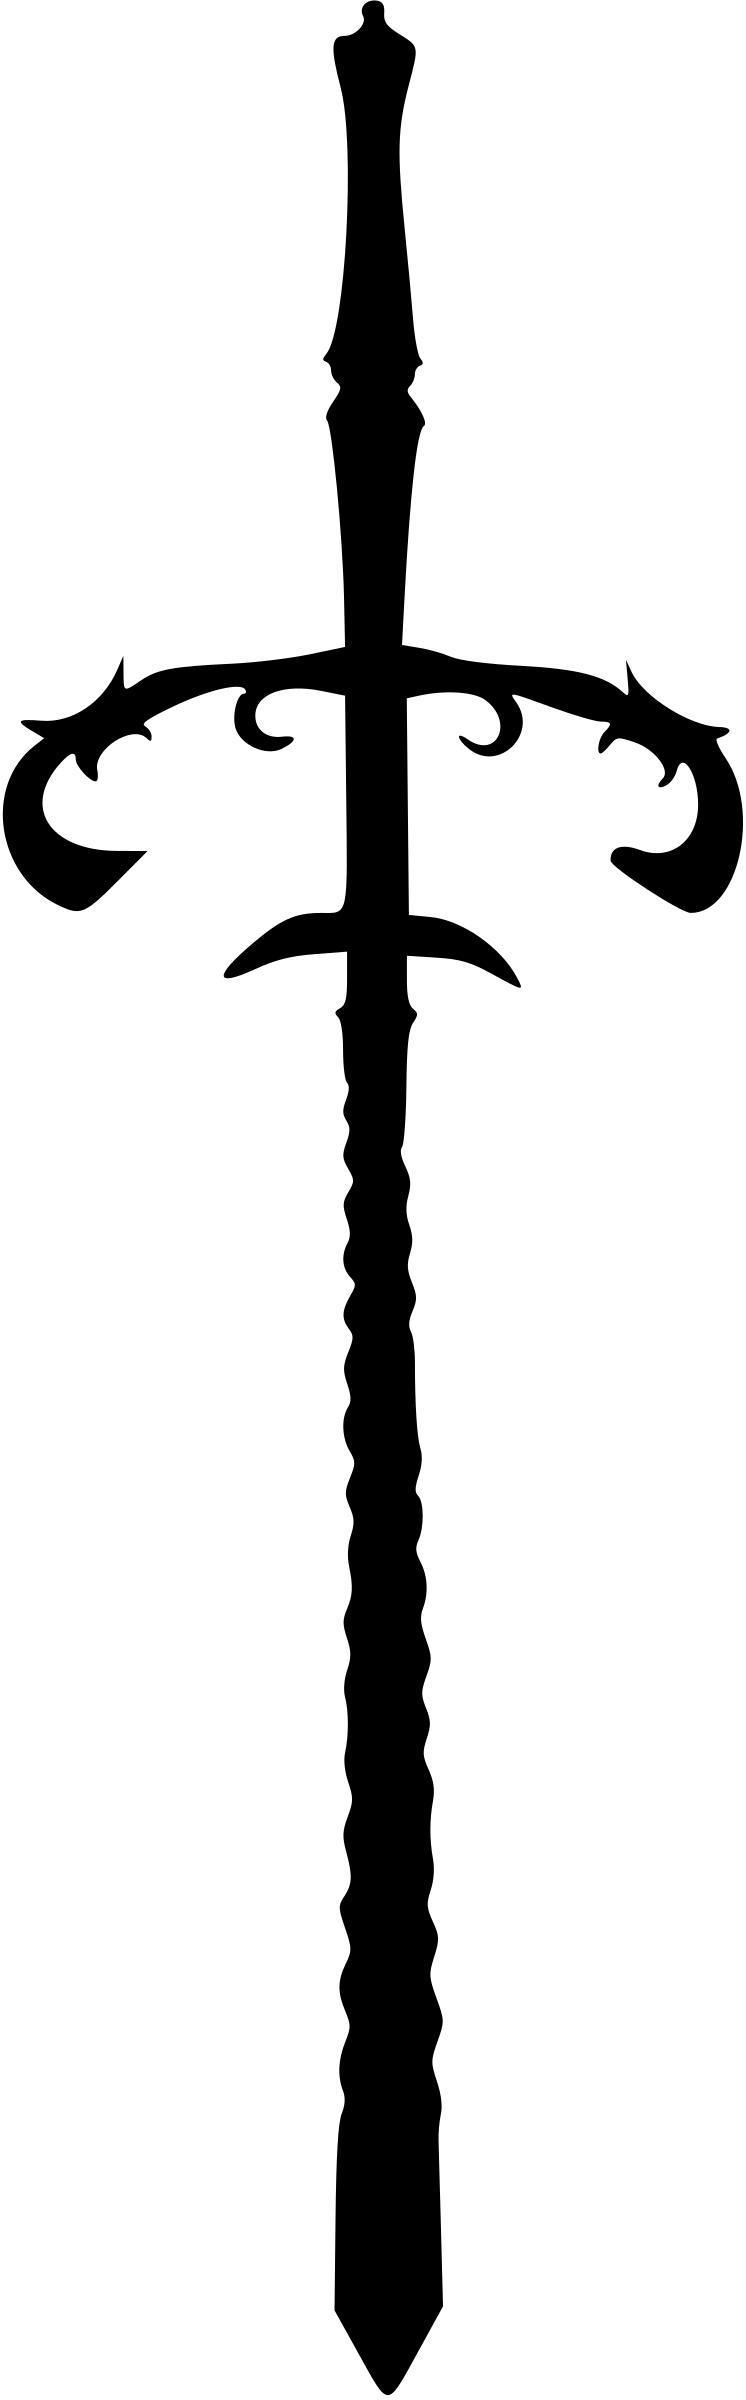 Sword (silhouette) png transparent